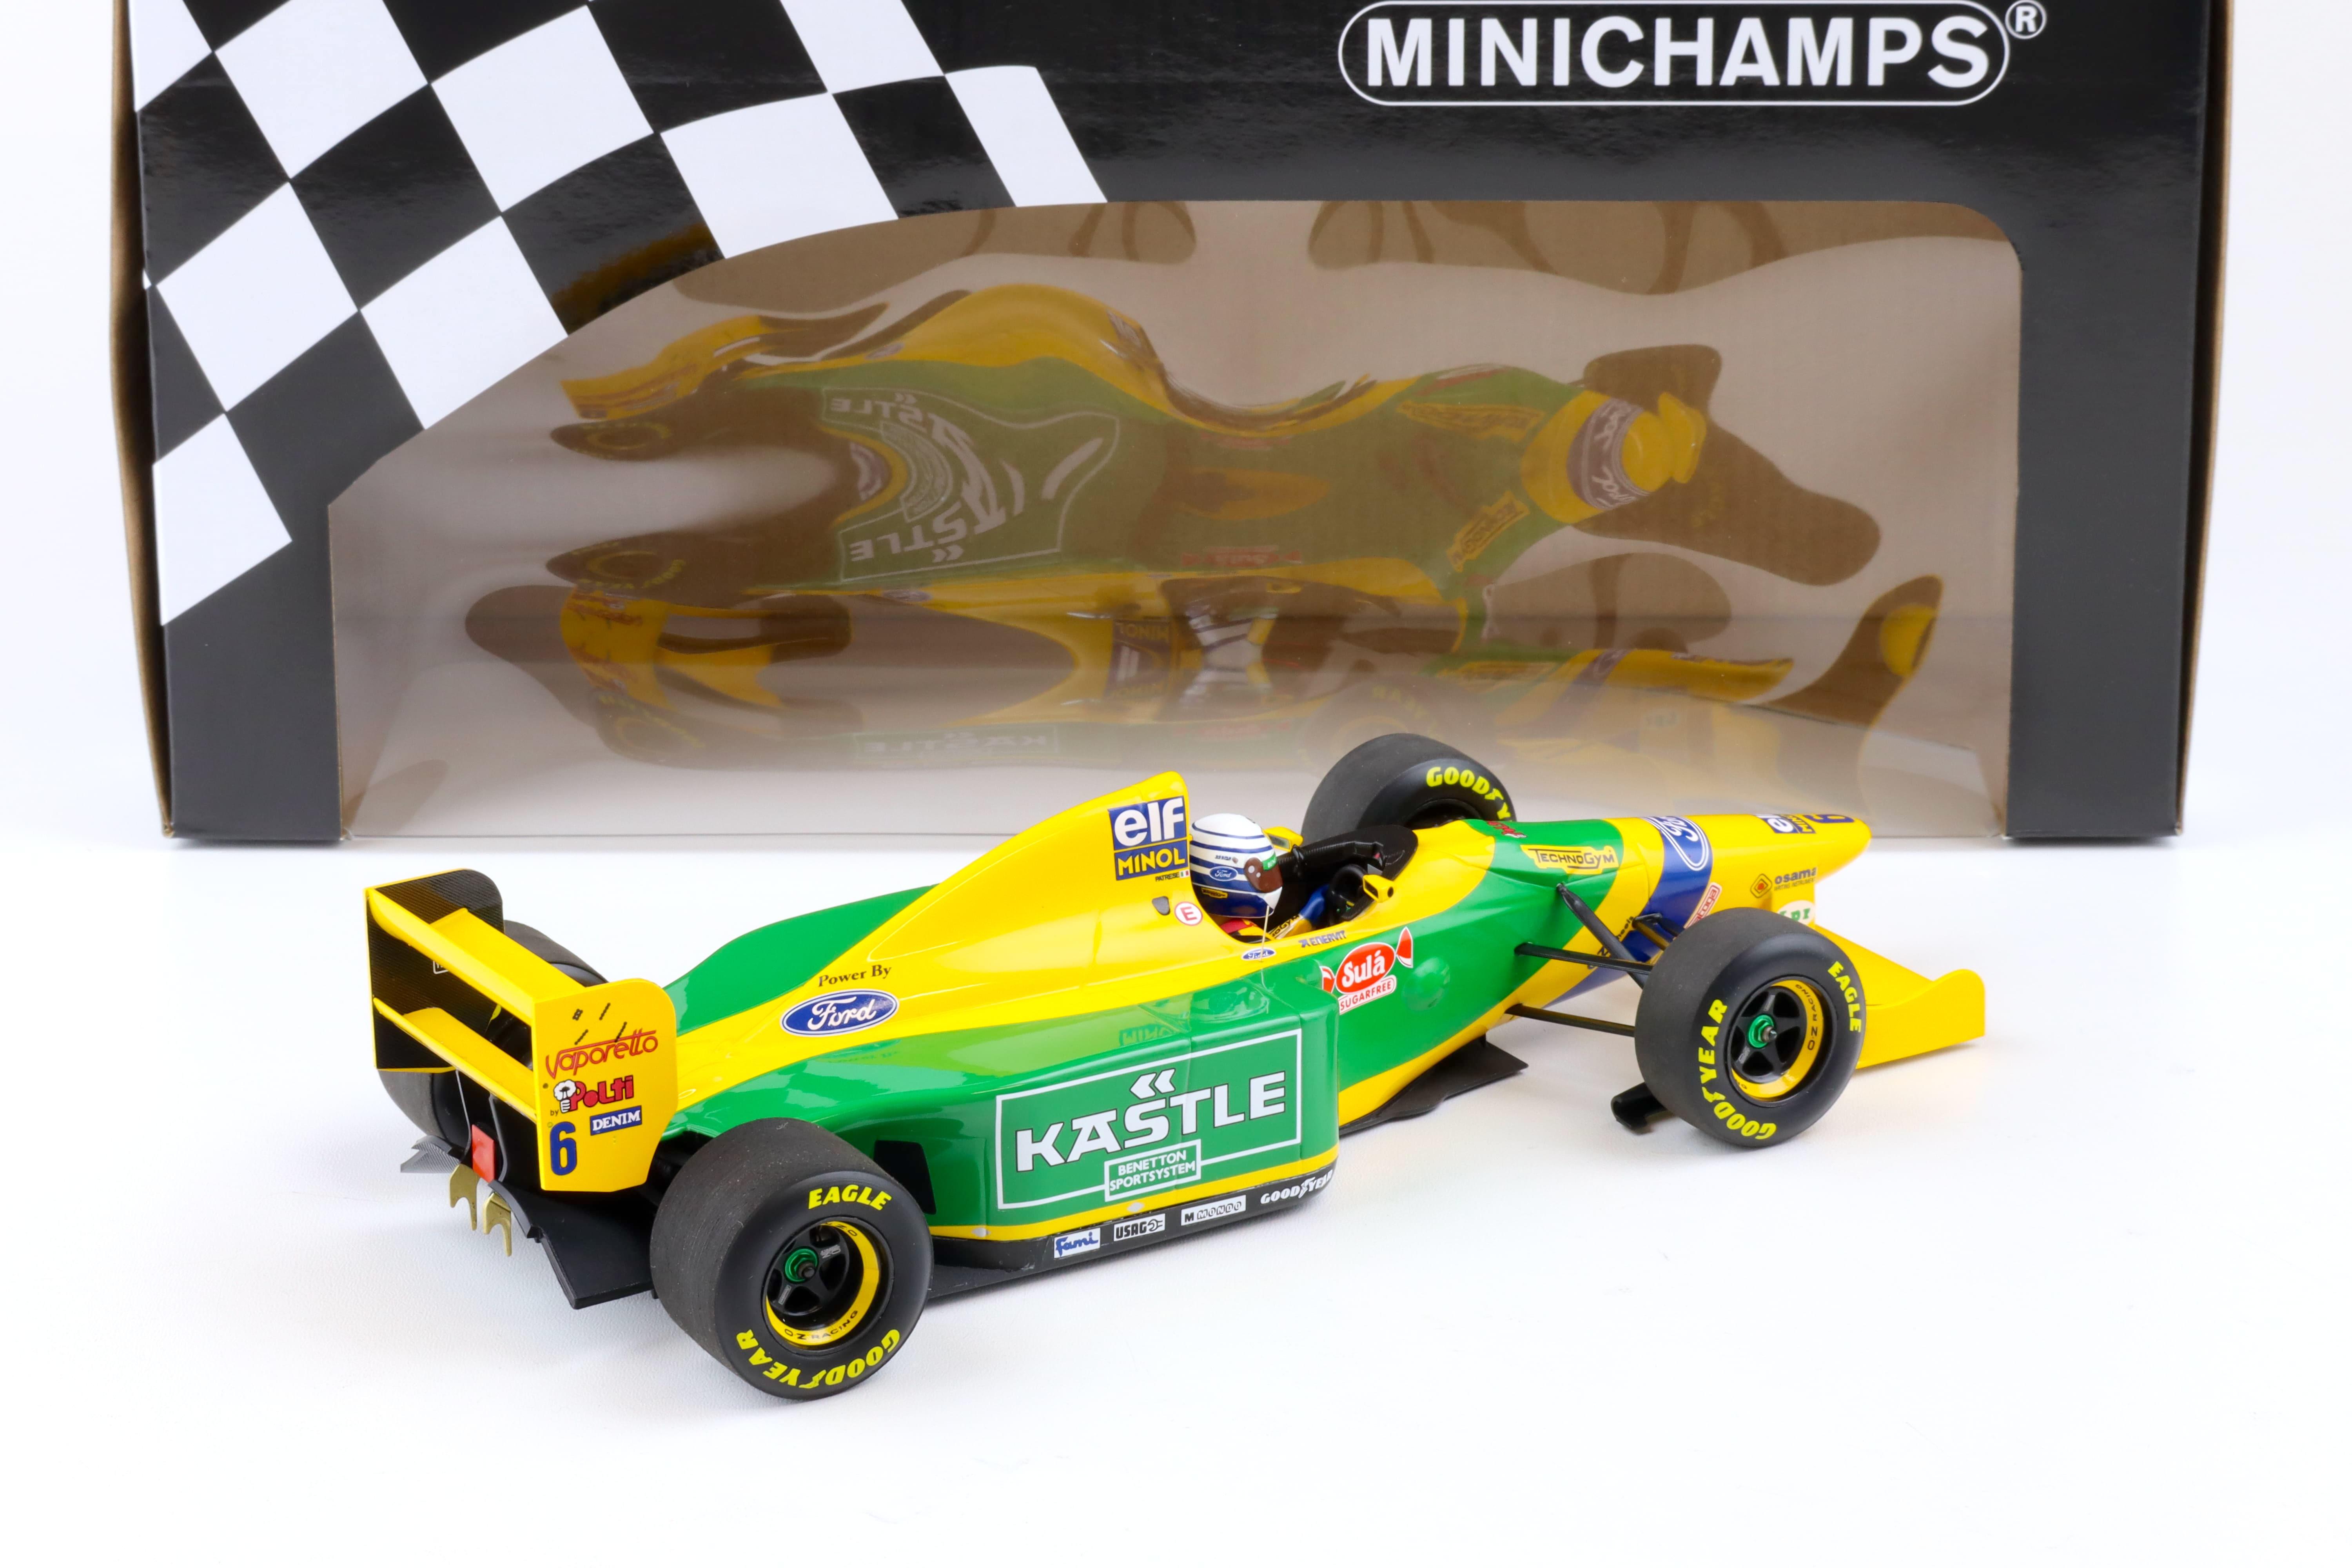 1:18 Minichamps Benetton Ford B193 R.Patrese 3rd Place British GP 1993 - Limited 150 pcs.